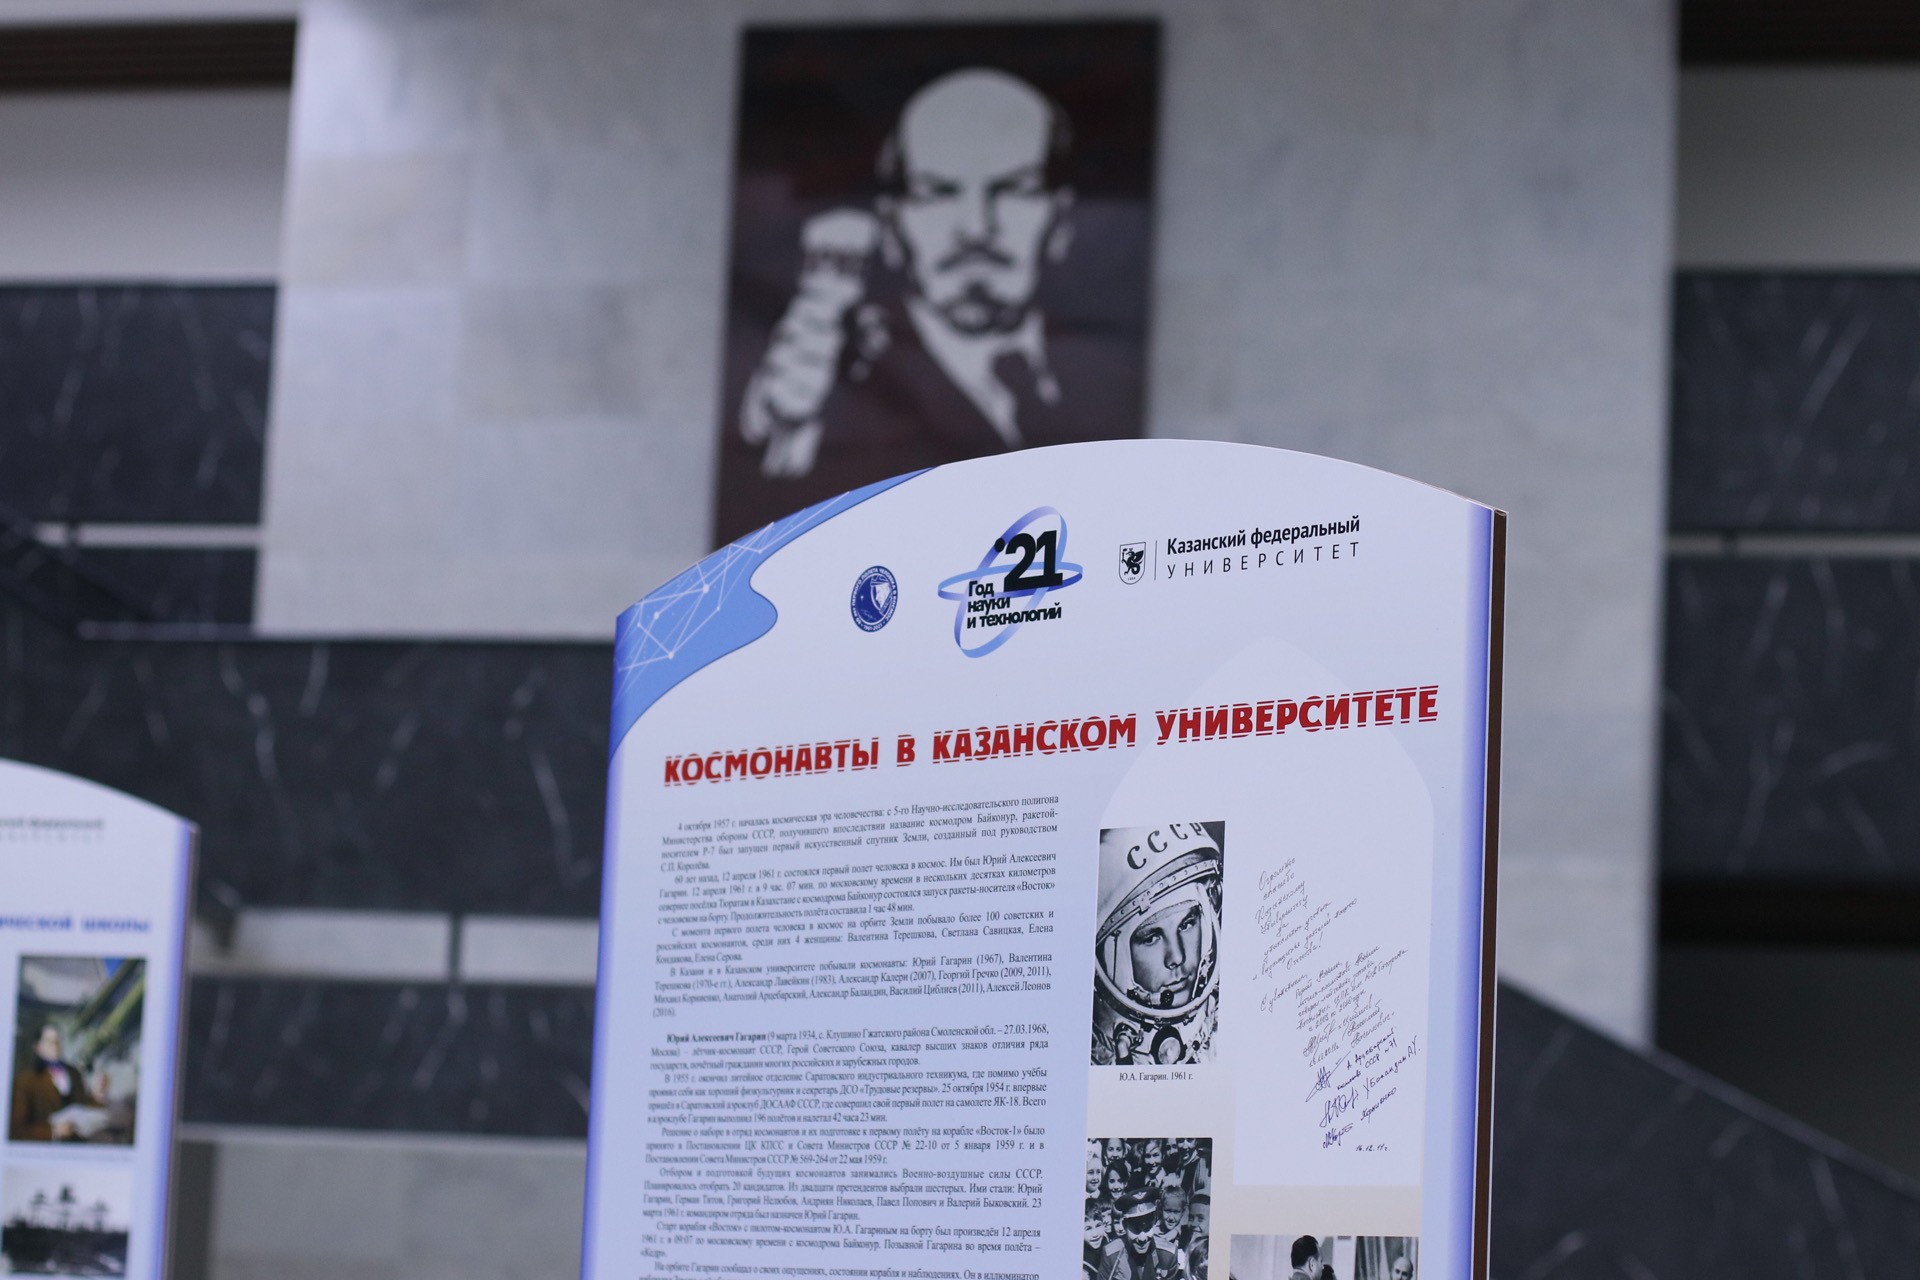 Two more exhibitions opened to celebrate Day of Cosmonautics